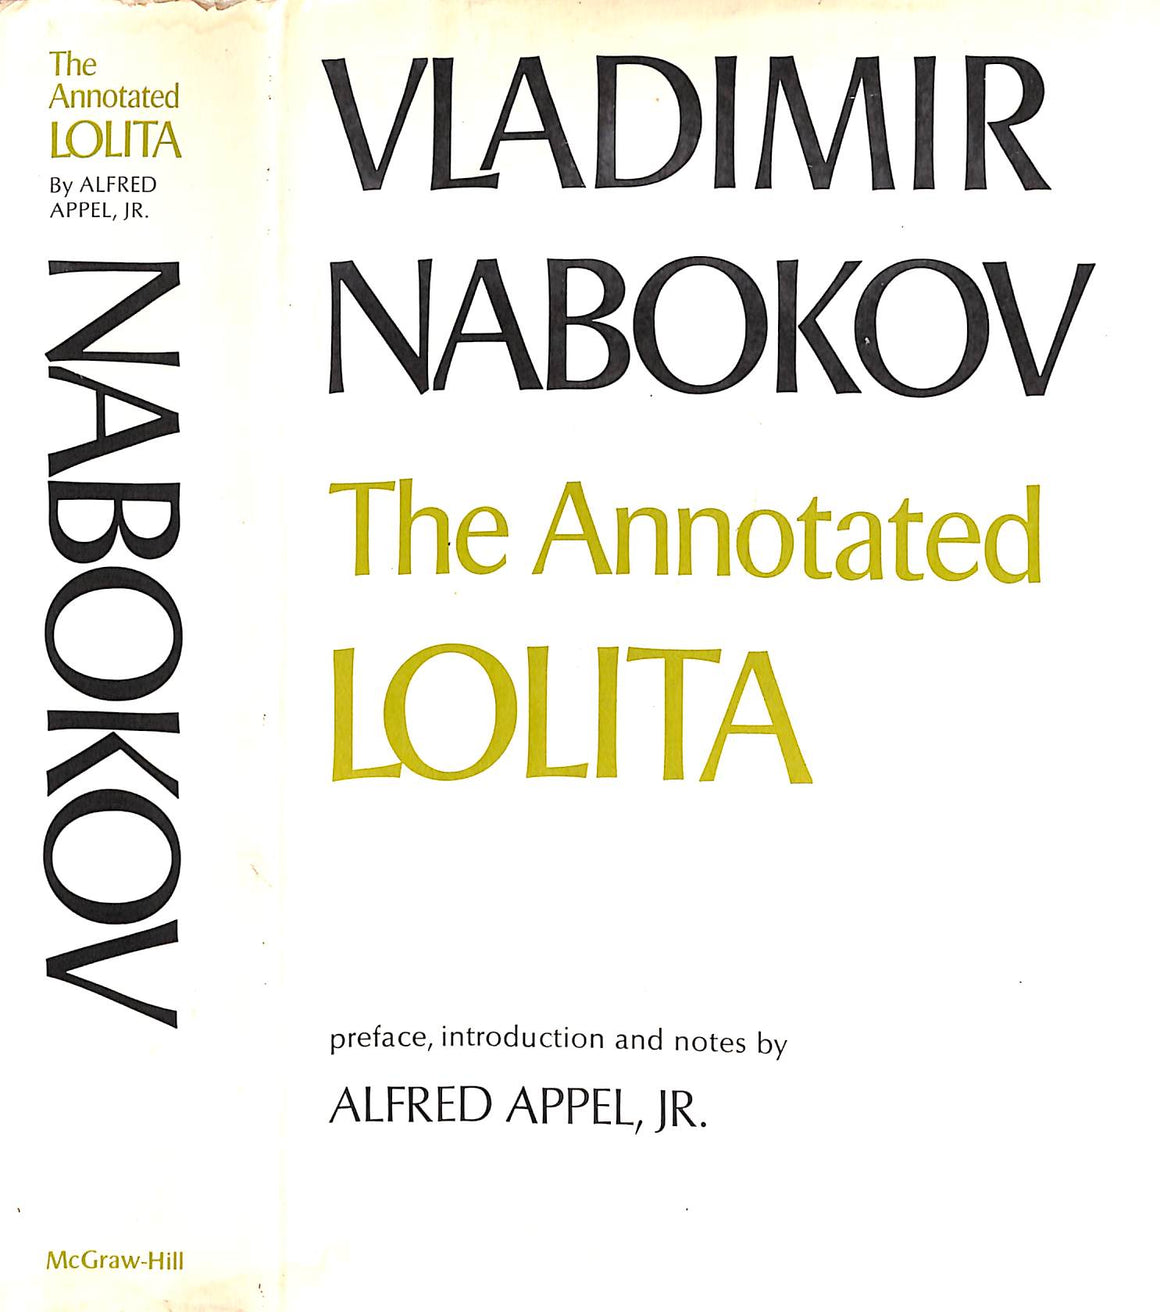 "Vladimir Nabokov The Annotated Lolita" 1970 APPEL, Alfred J.